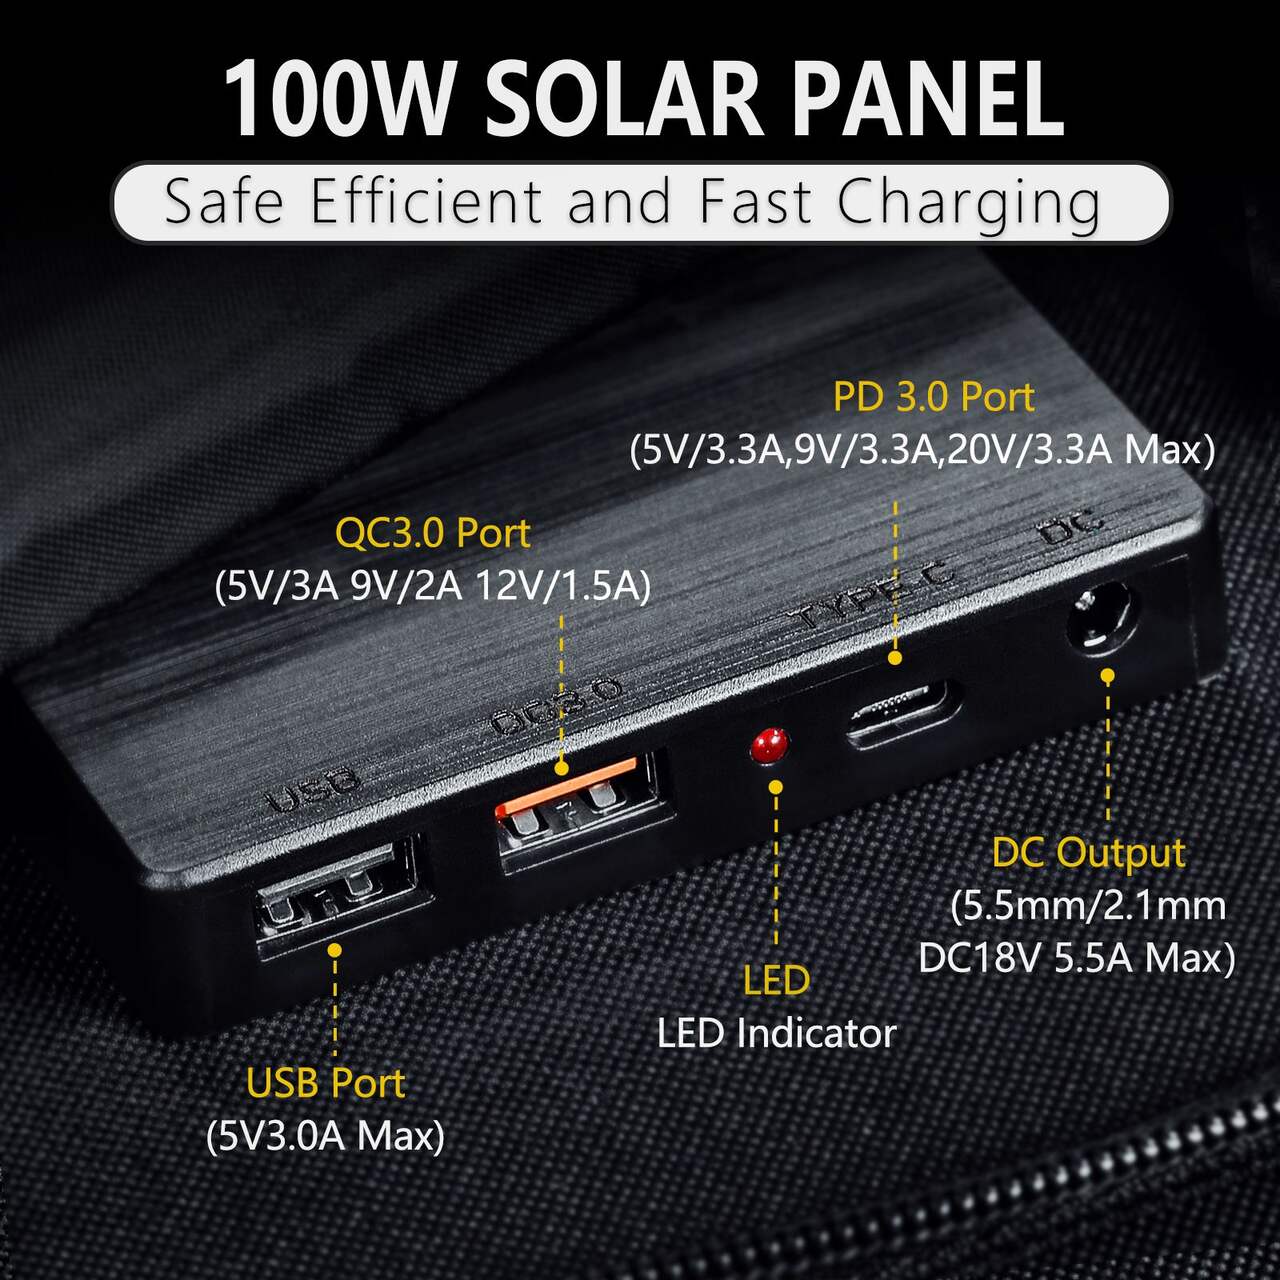 ROCKSOLAR Foldable 100W Solar Panel DC & USB Output, IP X 4